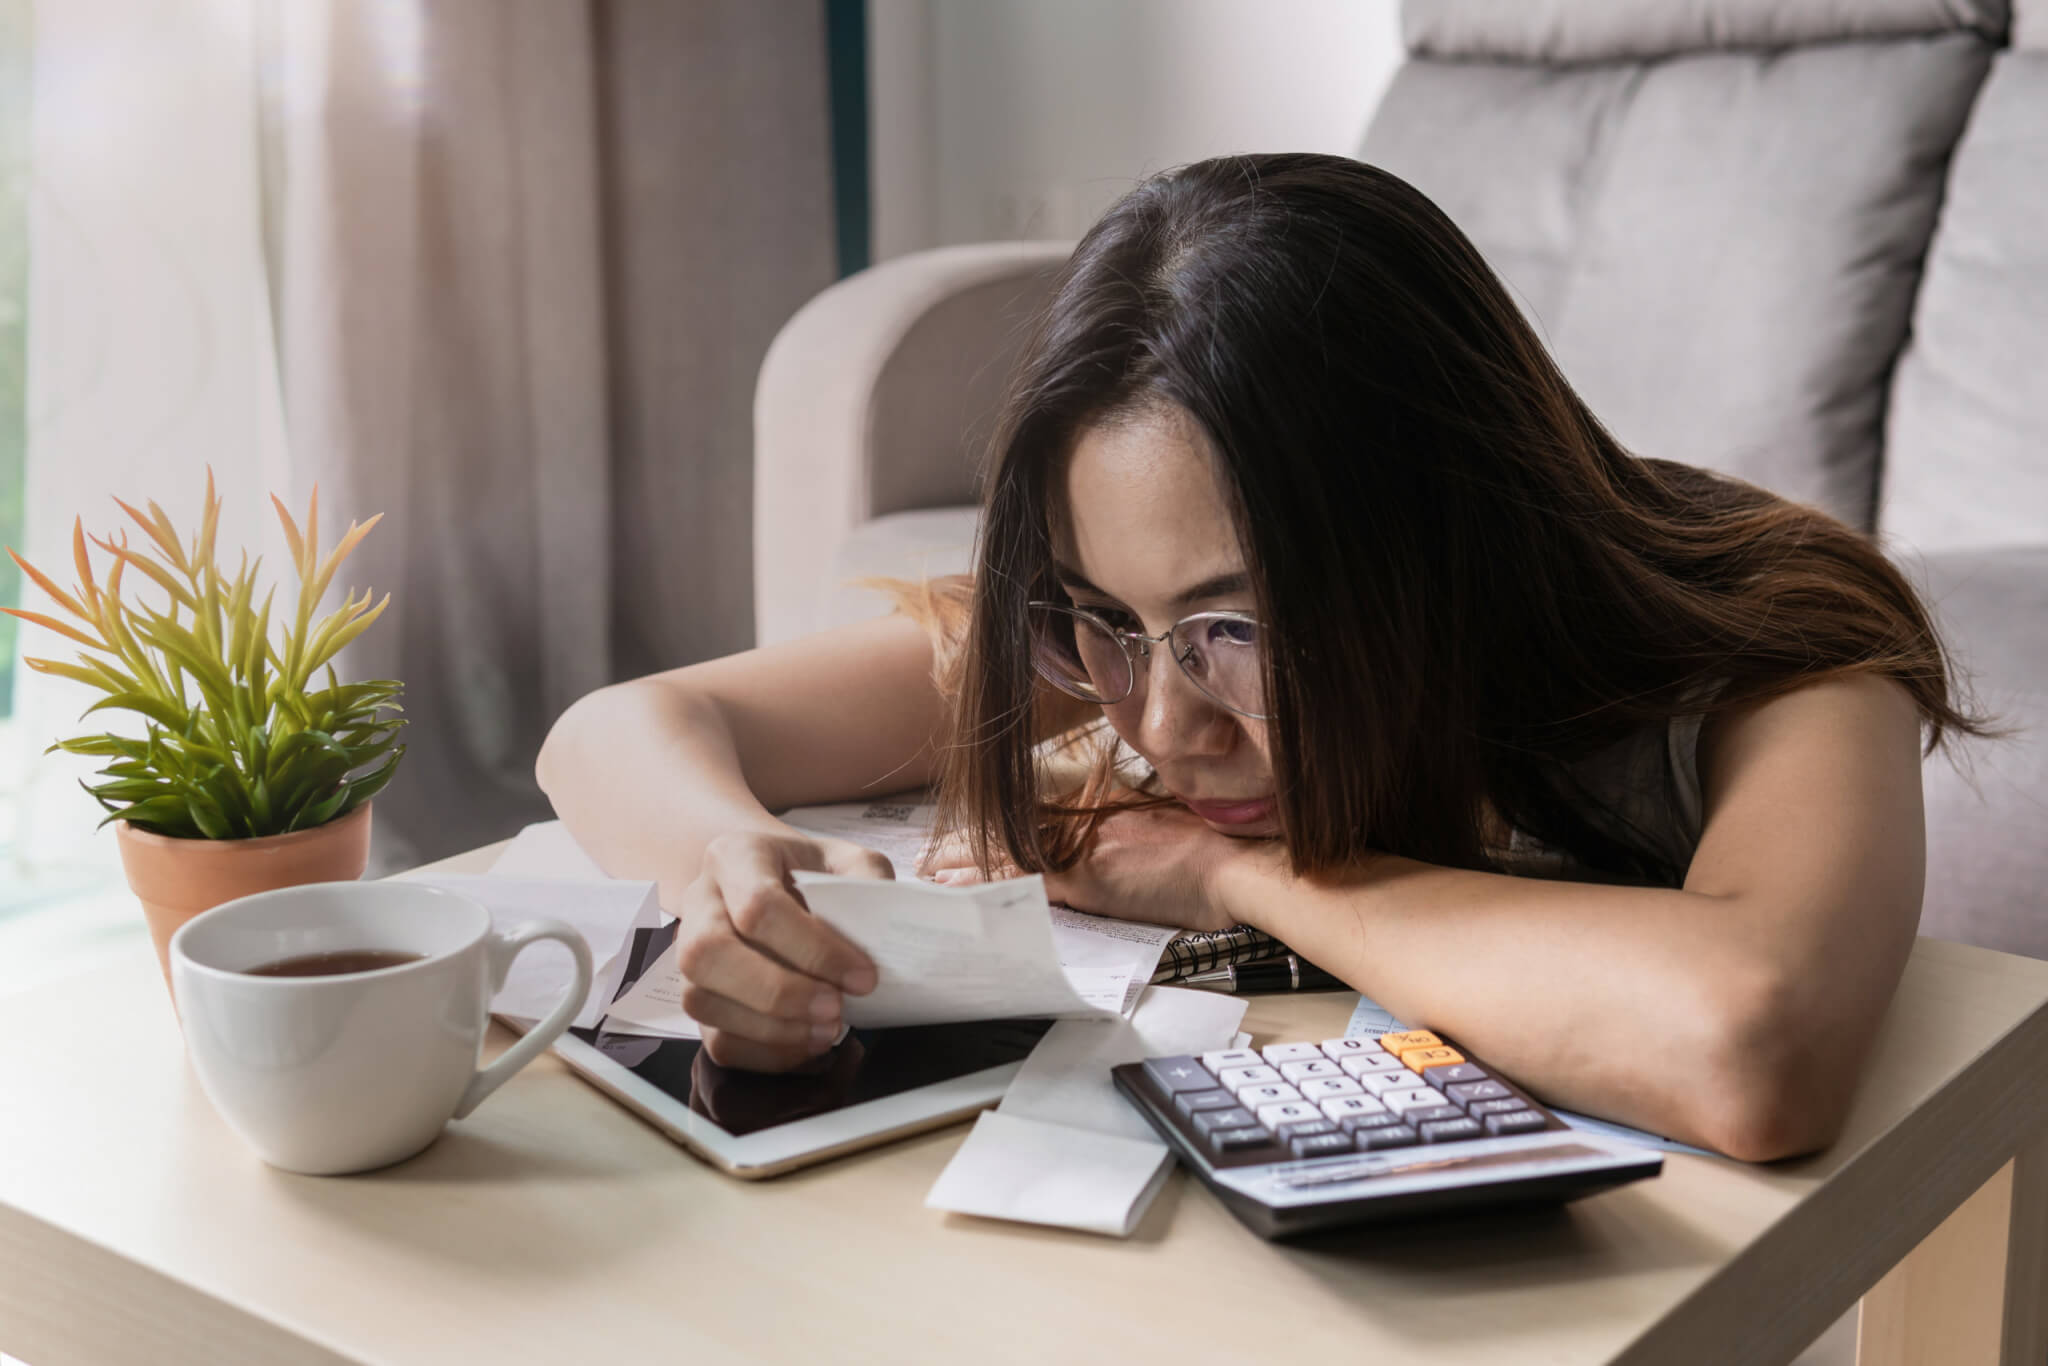 Woman worried about money, finances, bills